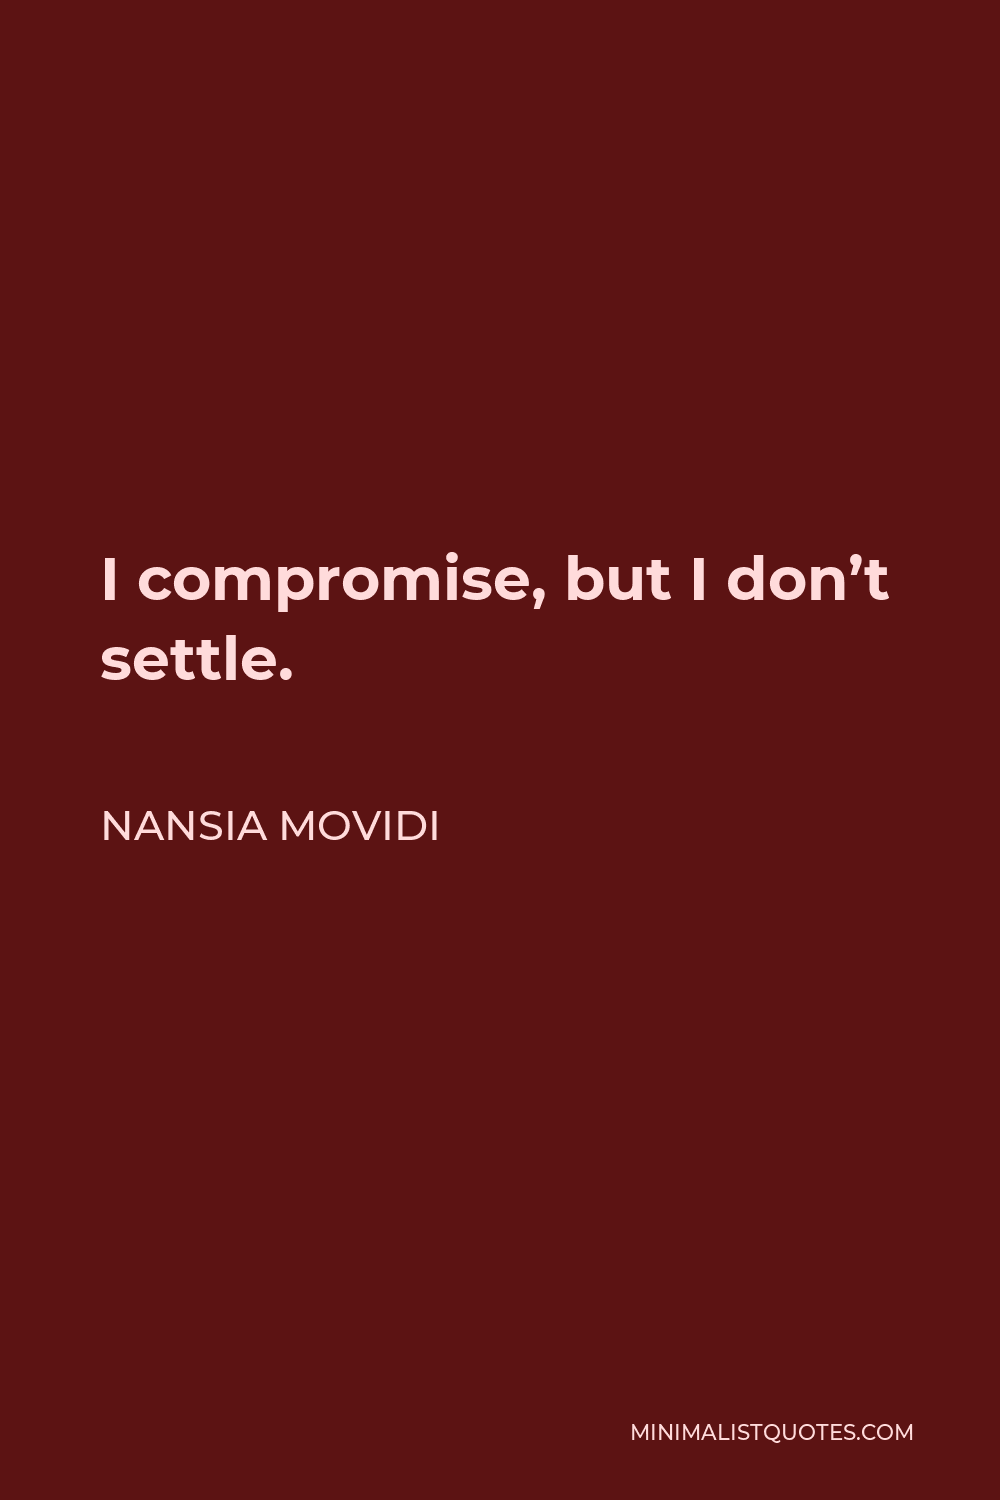 Nansia Movidi Quote - I compromise, but I don’t settle.